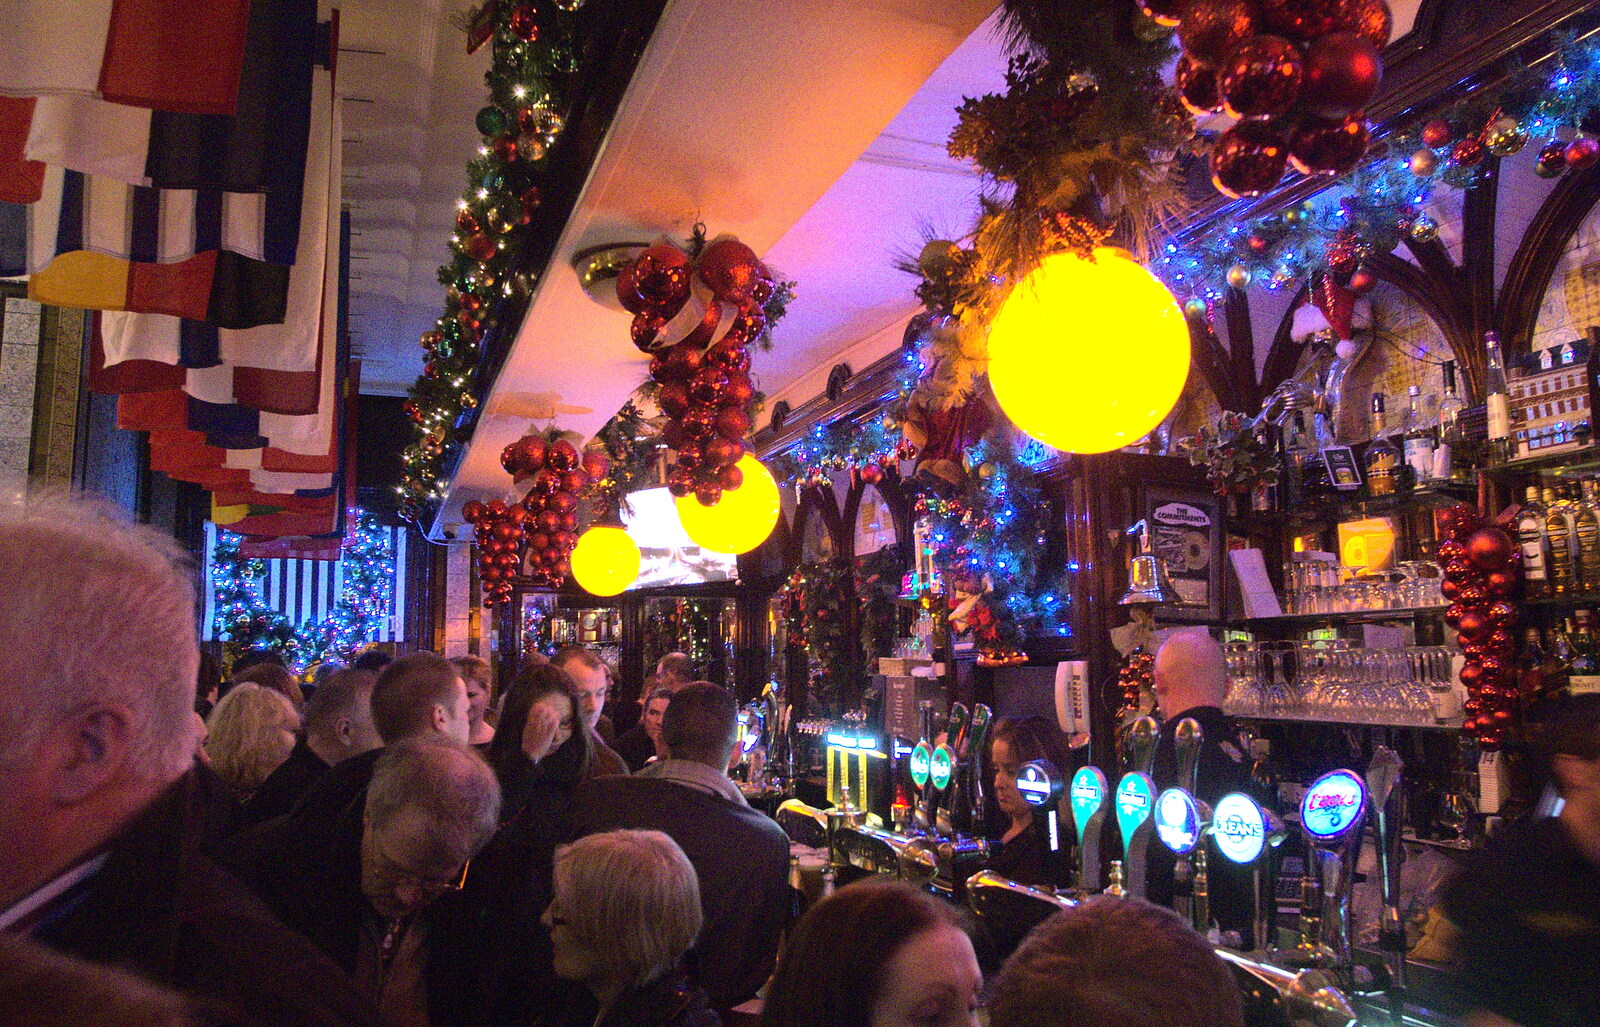 Inside Bruxelles bar from A Night on the Lash, Dublin, Ireland - 14th December 2012